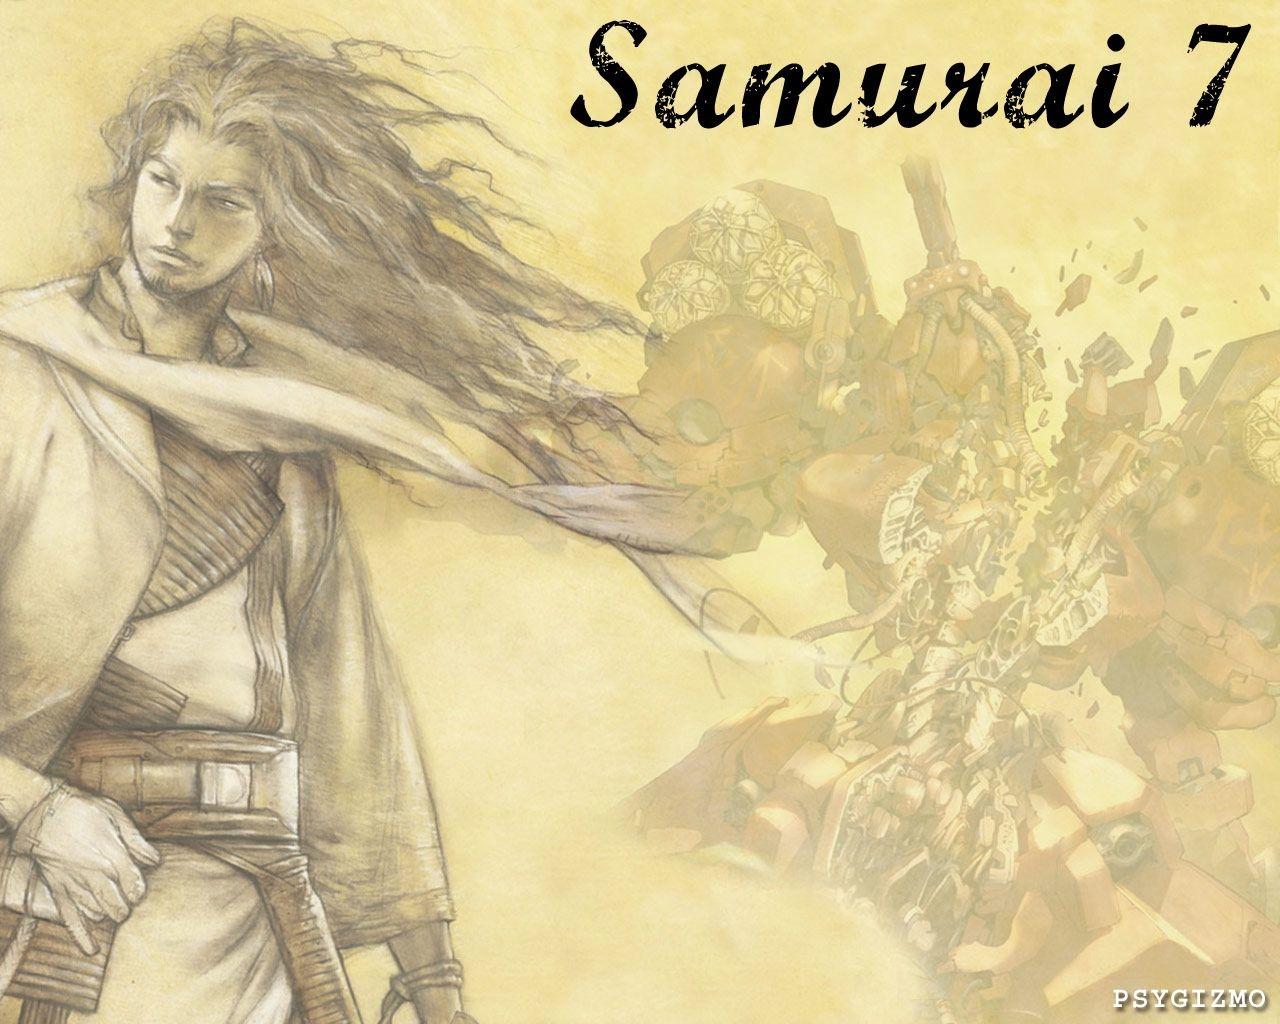 Samurai 7 at 1024 x 1024 iPad size wallpapers HD quality